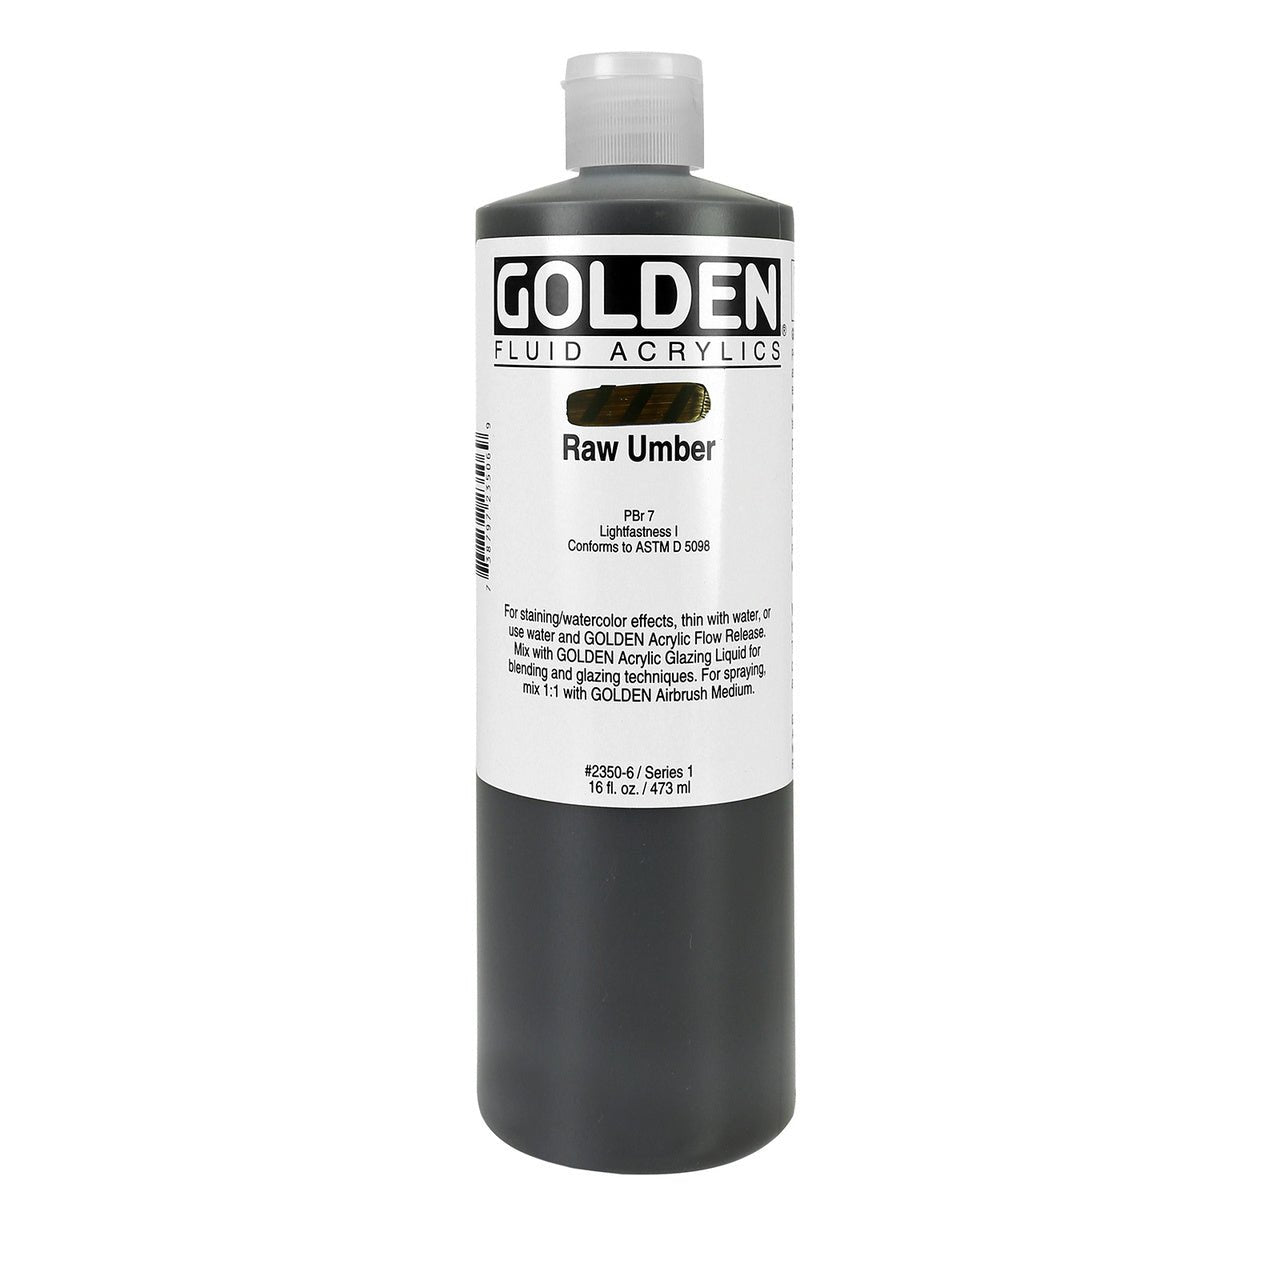 Golden Fluid Acrylic Raw Umber 16 oz - merriartist.com